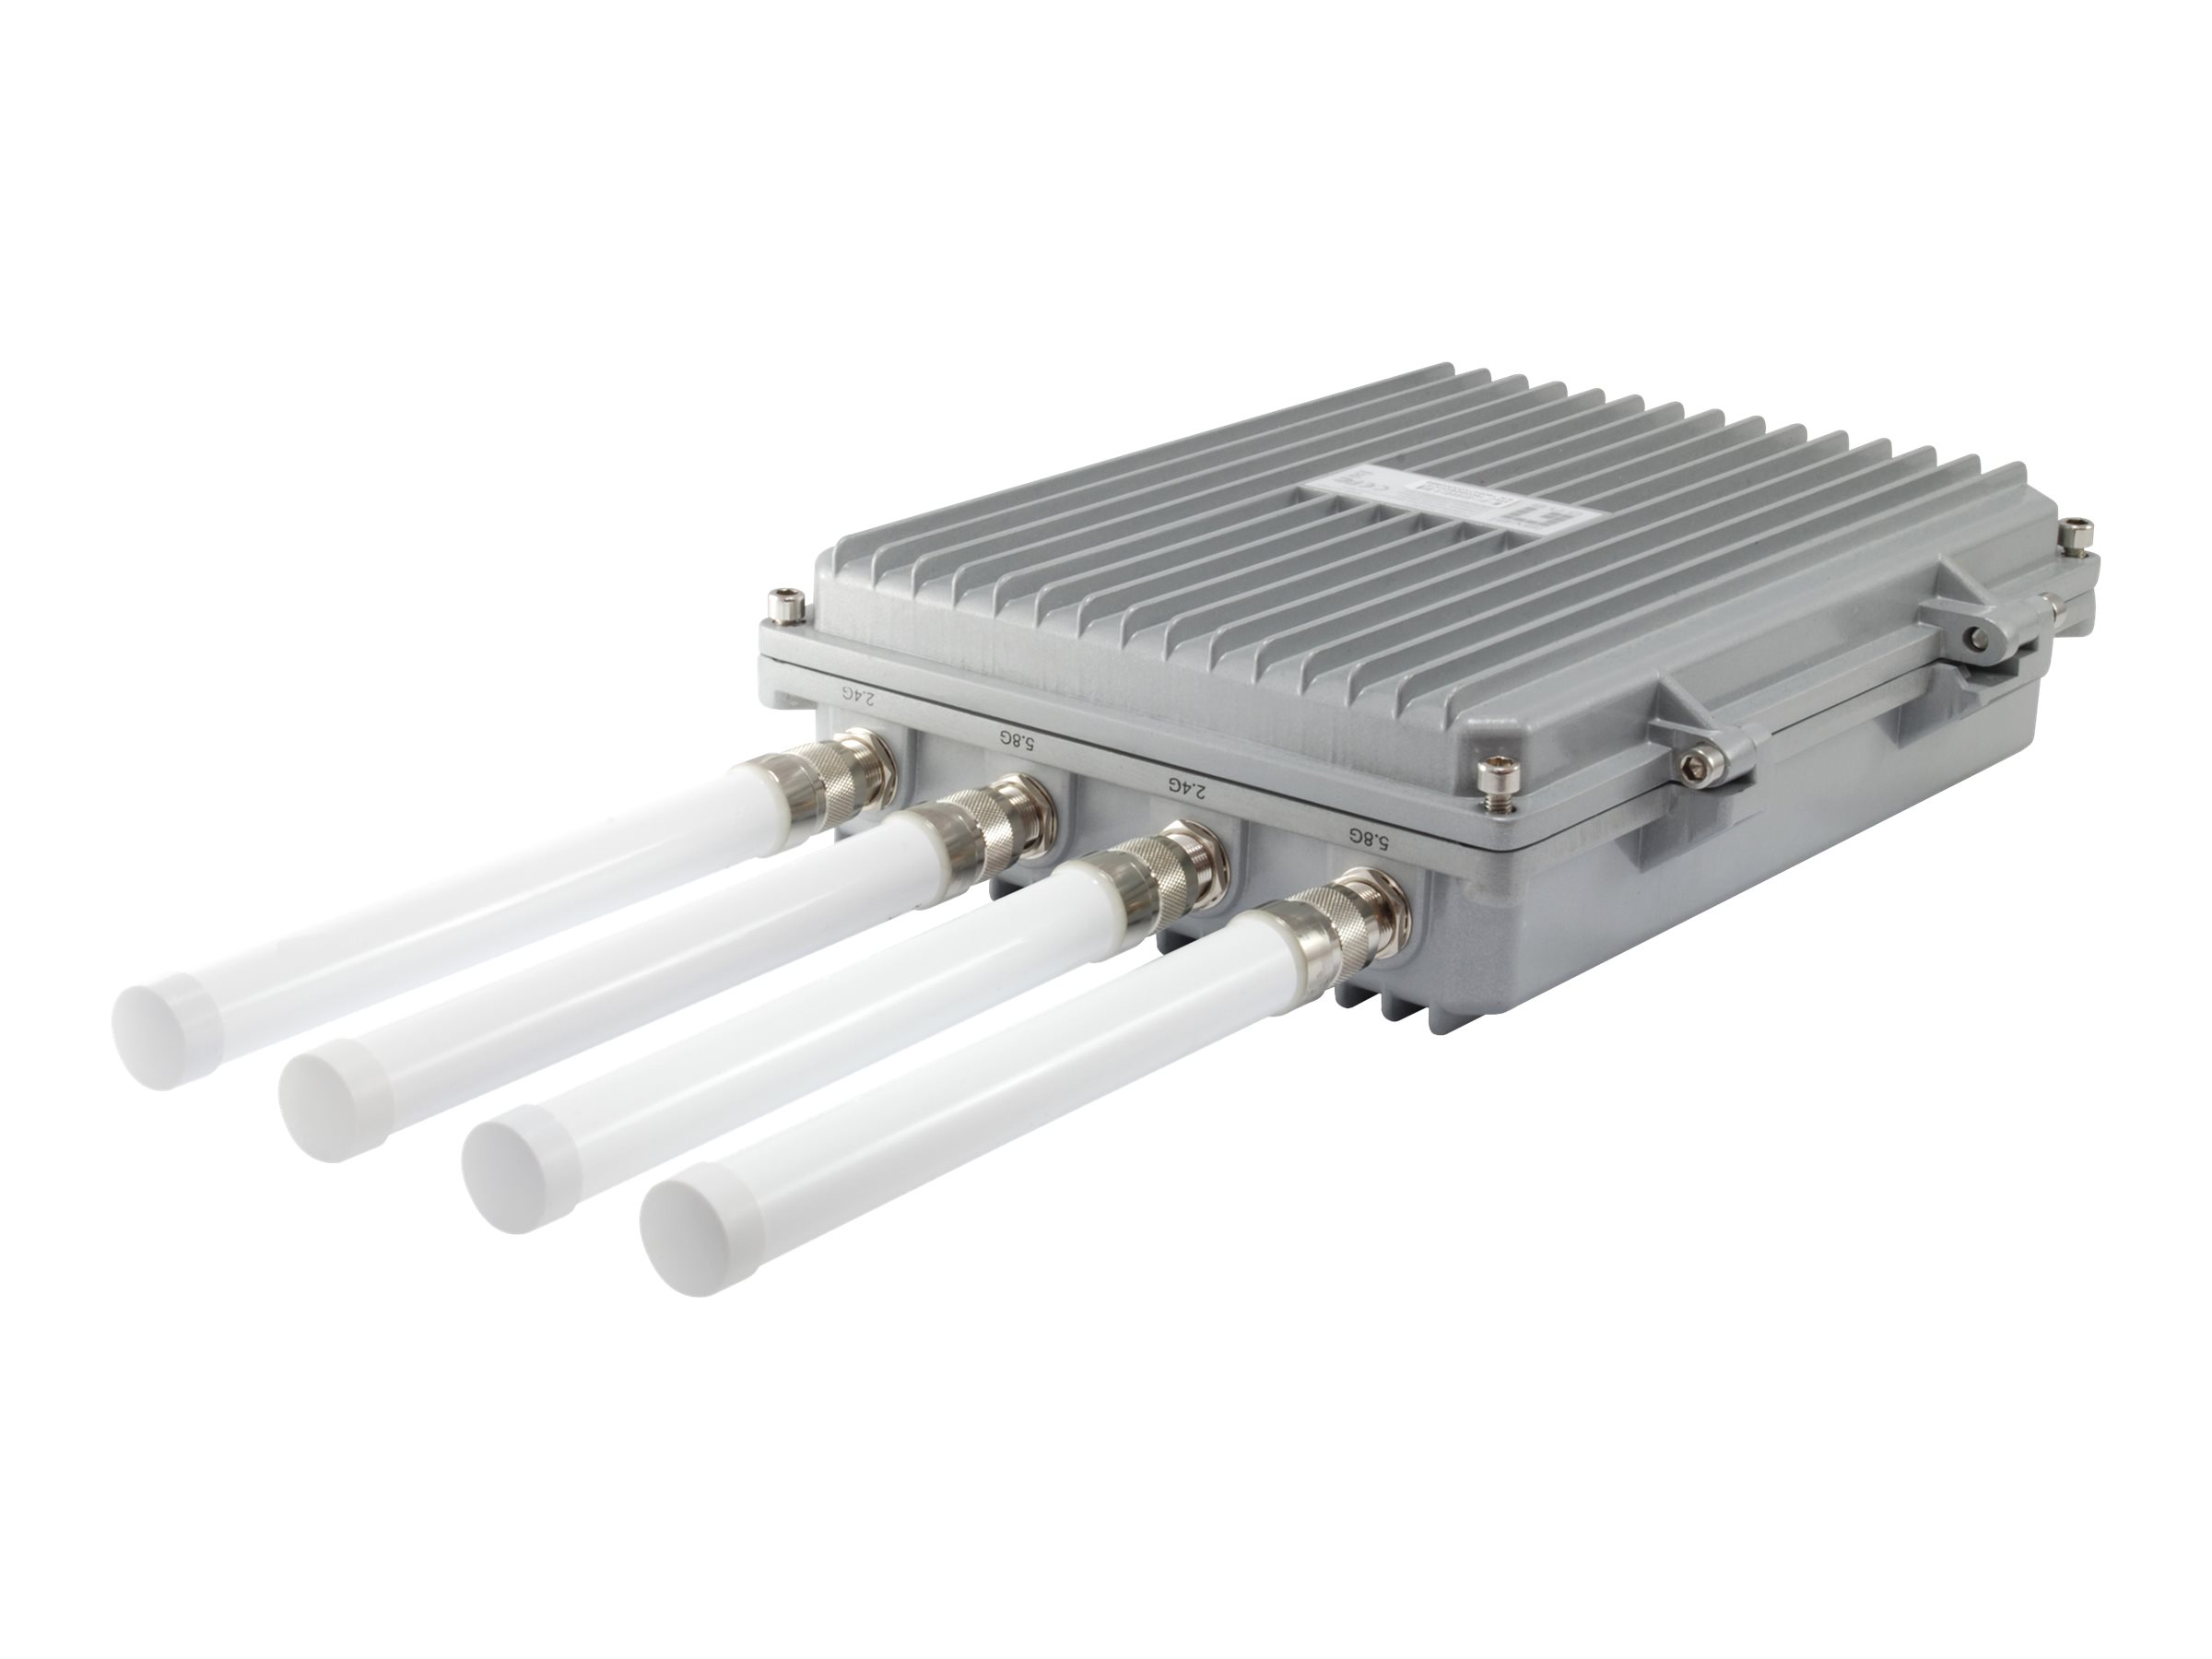 LevelOne OAN-4058 - Antenne - Wi-Fi - 8 dBi (für 5 GHz)